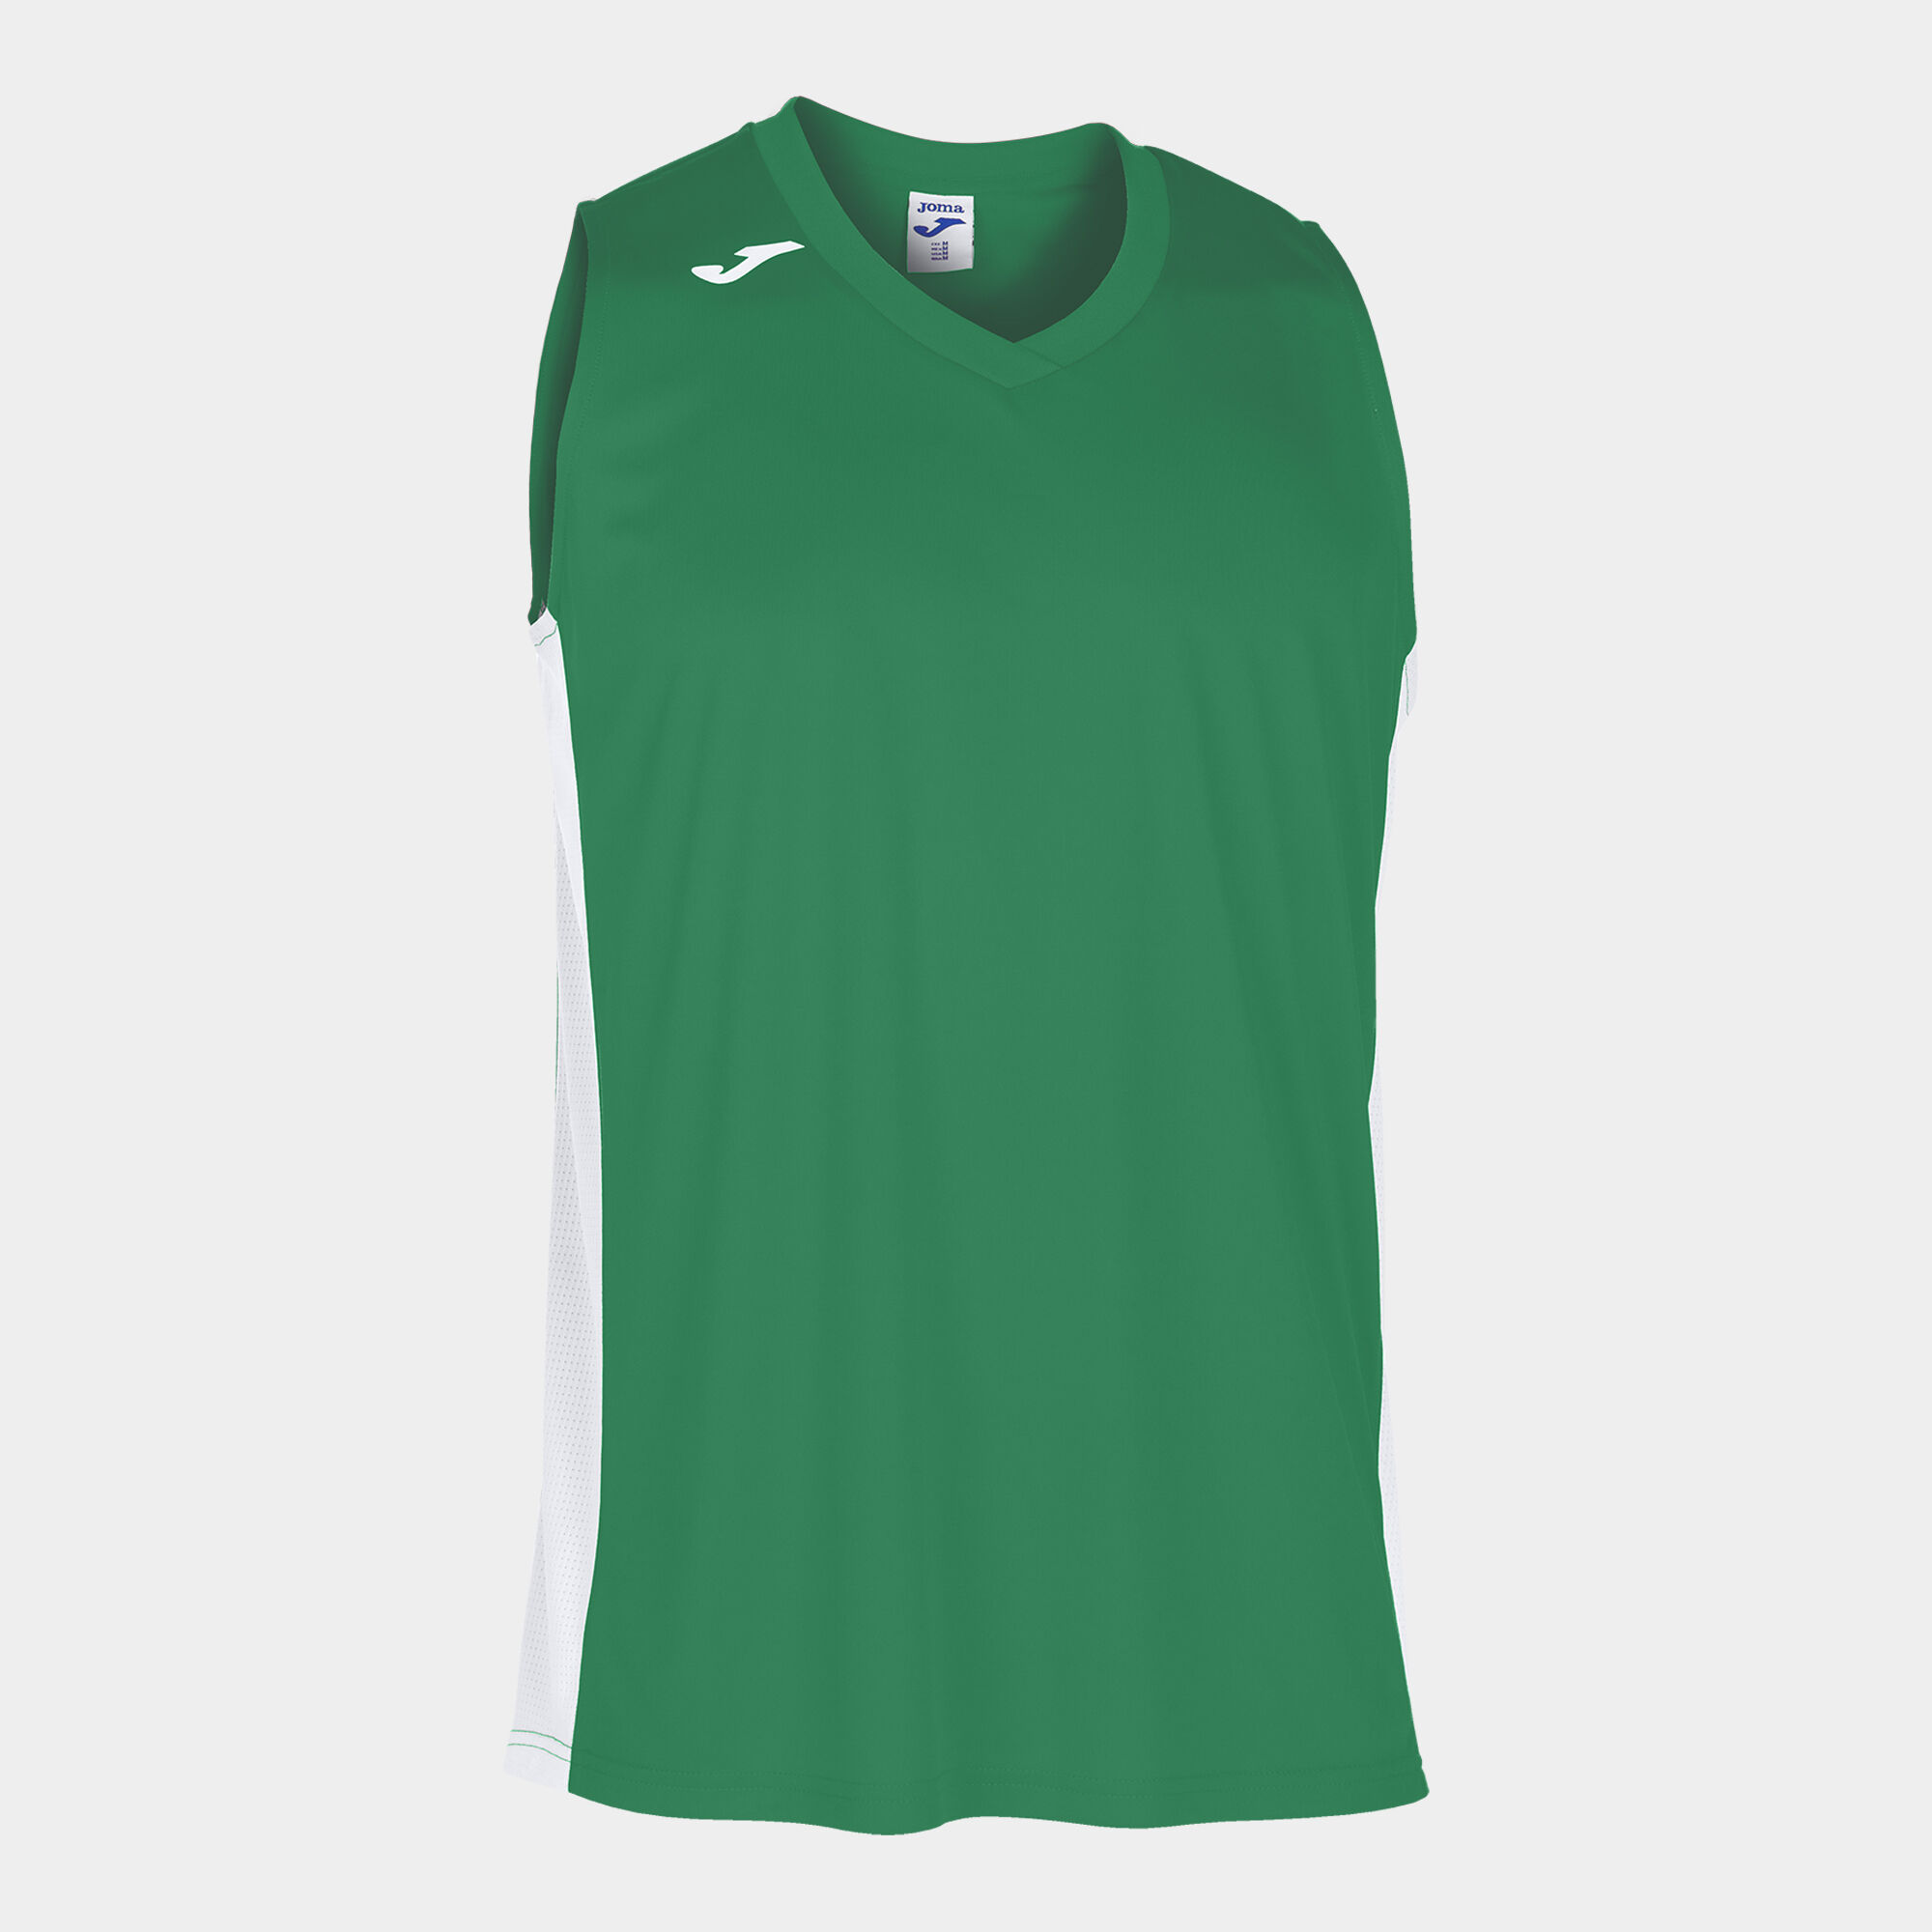 Shirt s/m mann Cancha III grün weiß